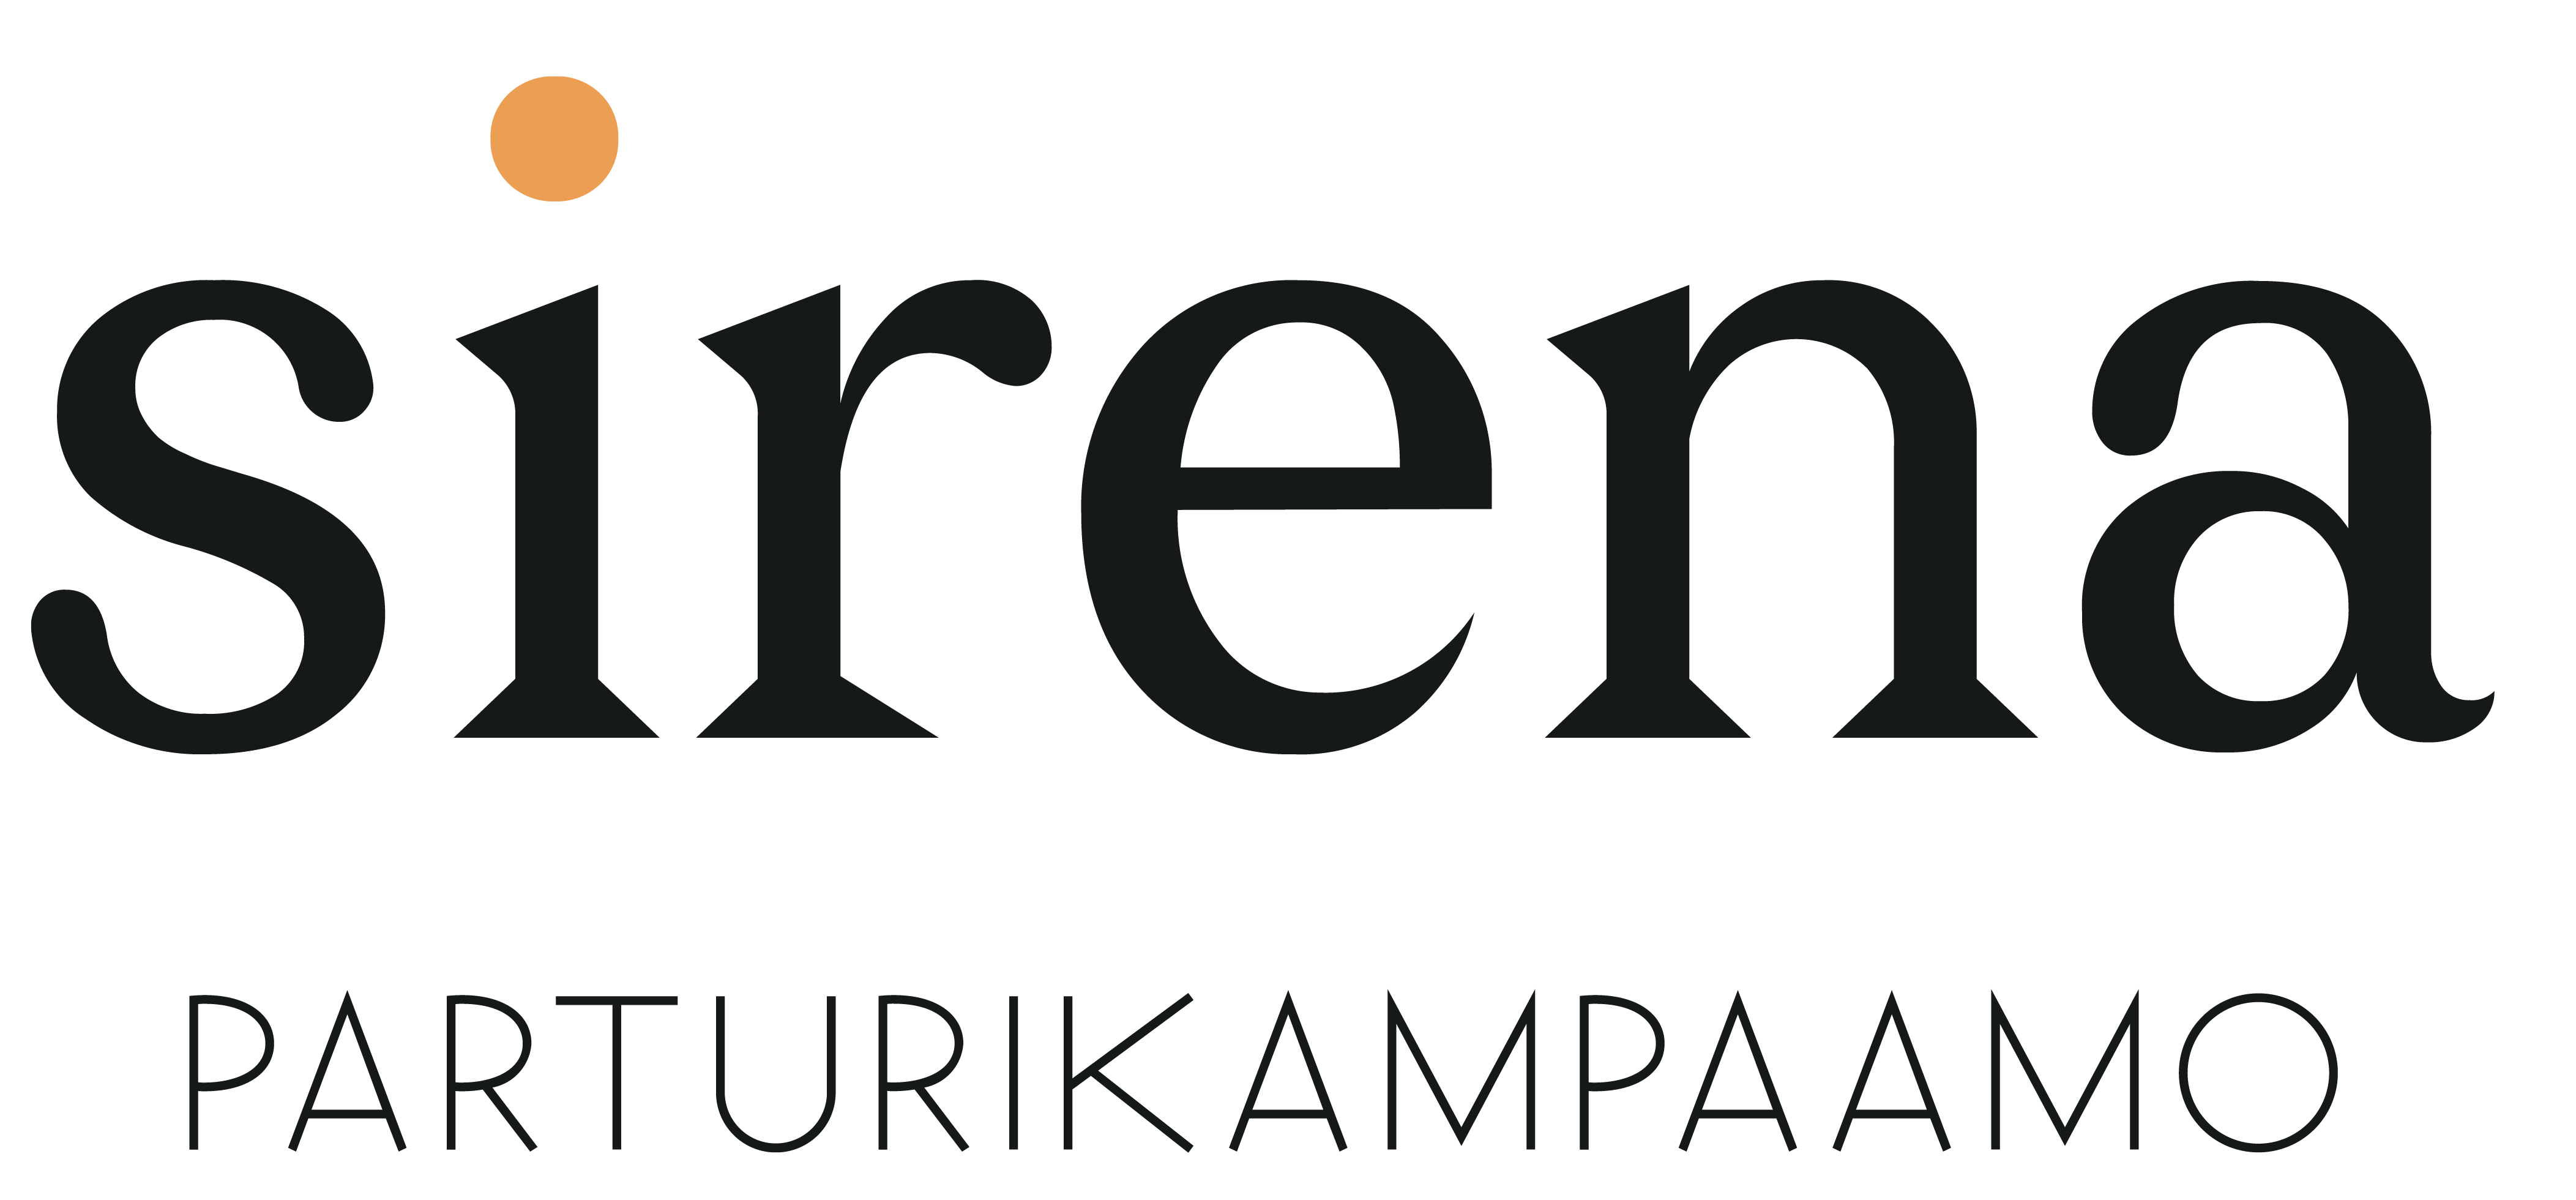 Parturi-kampaamo Sirena -logo